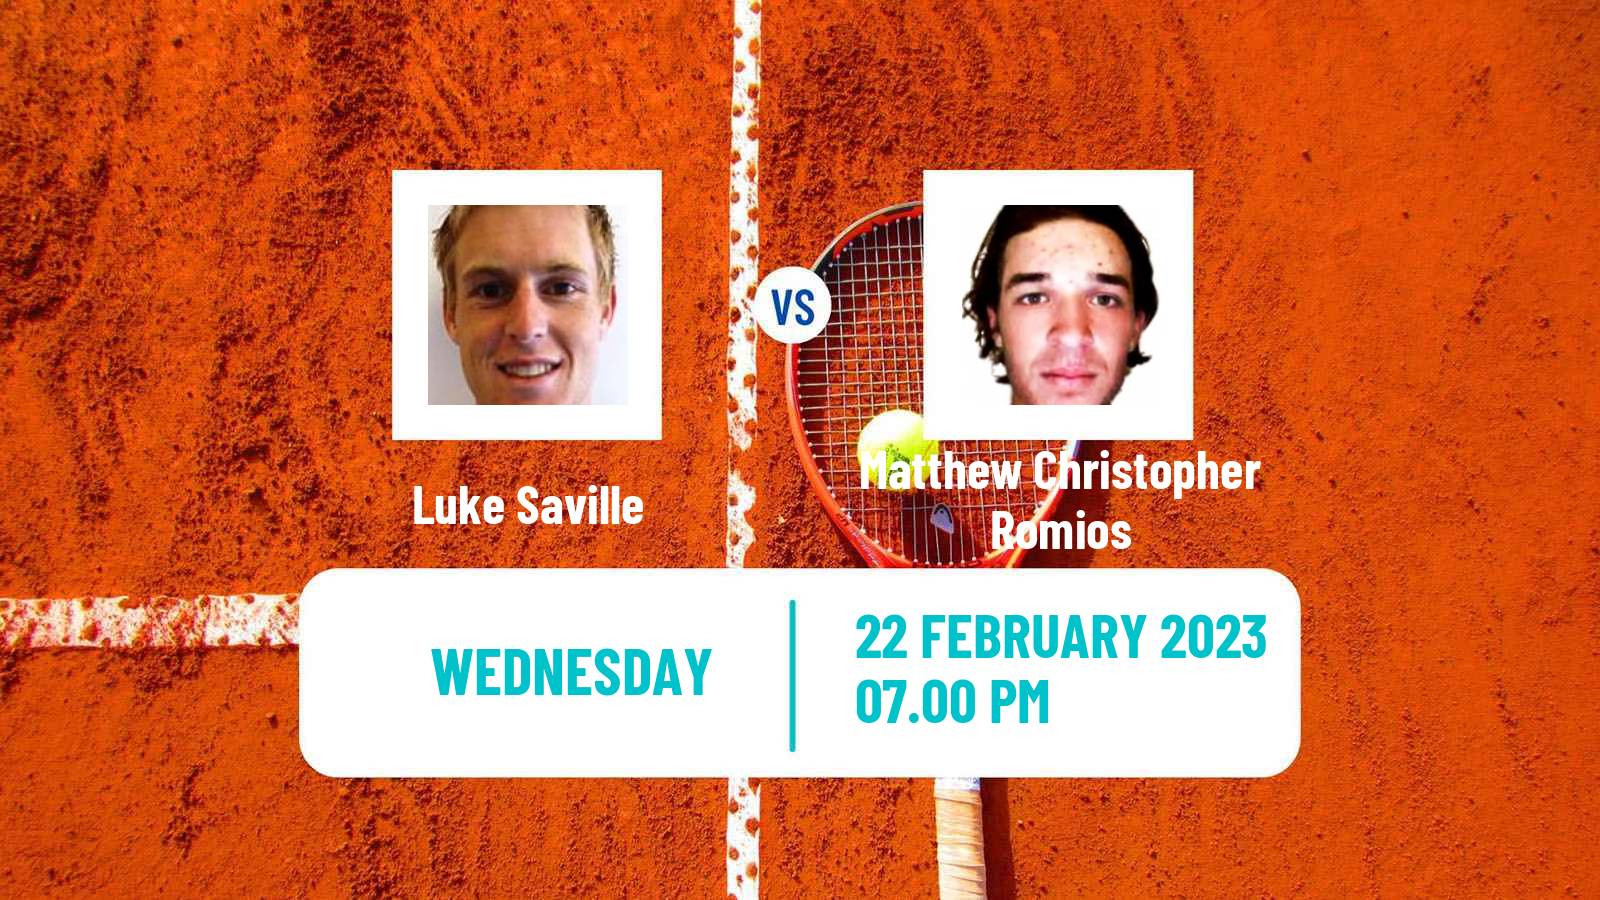 Tennis ITF Tournaments Luke Saville - Matthew Christopher Romios